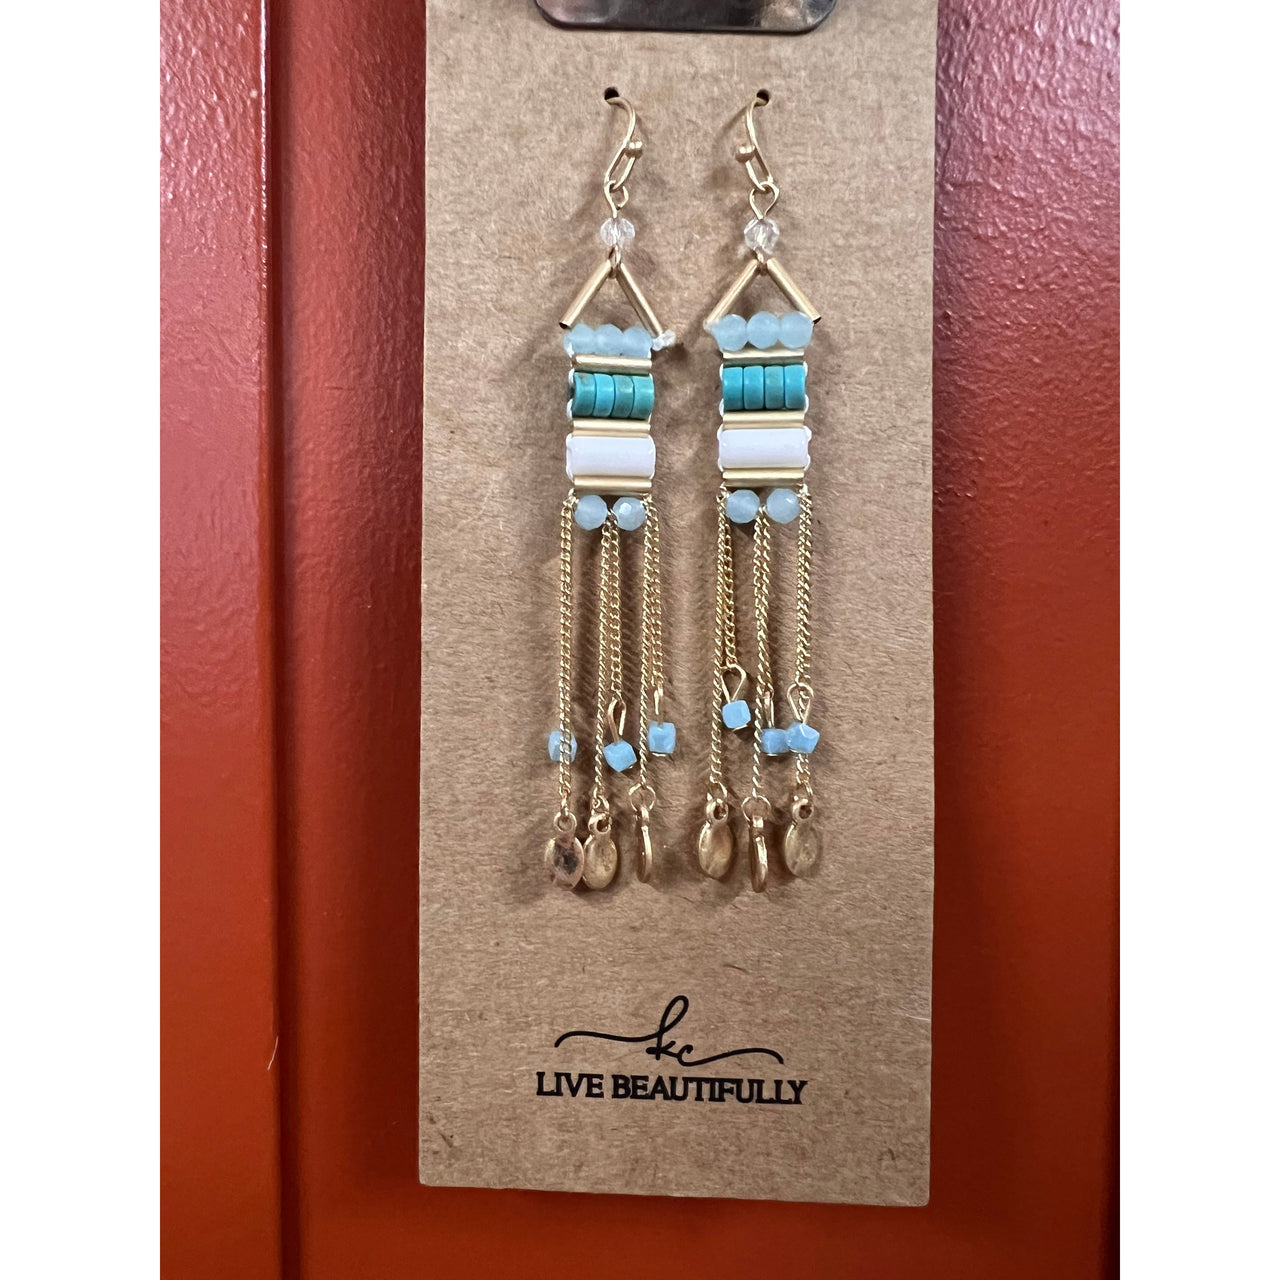 Live Beautifully Earrings - Turquoise Beaded Bars